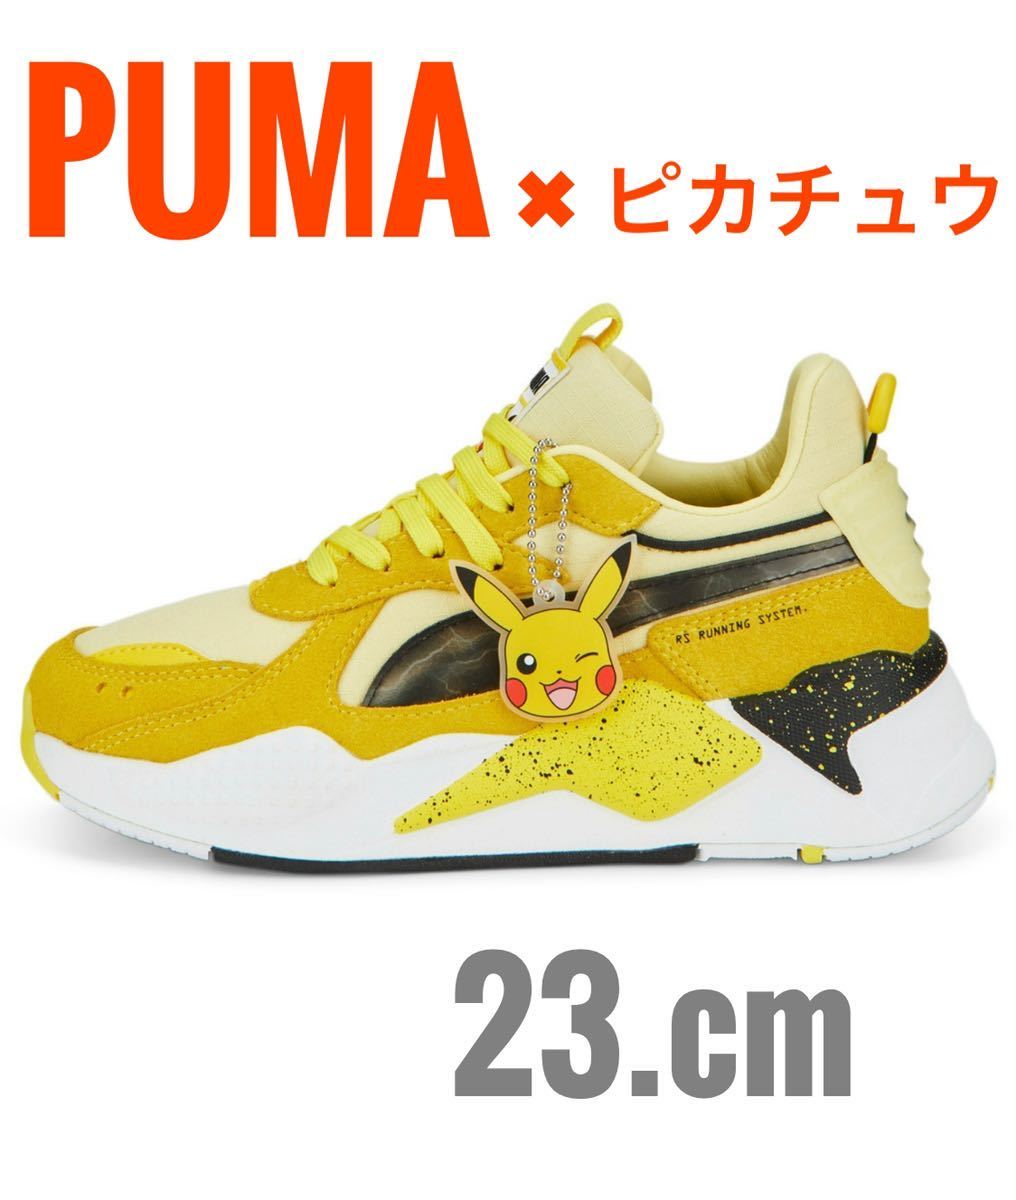 PUMA x POKEMON プーマ×ポケモンコラボ ピカチュウ RS-X スニーカー Jr. 23cm 新品